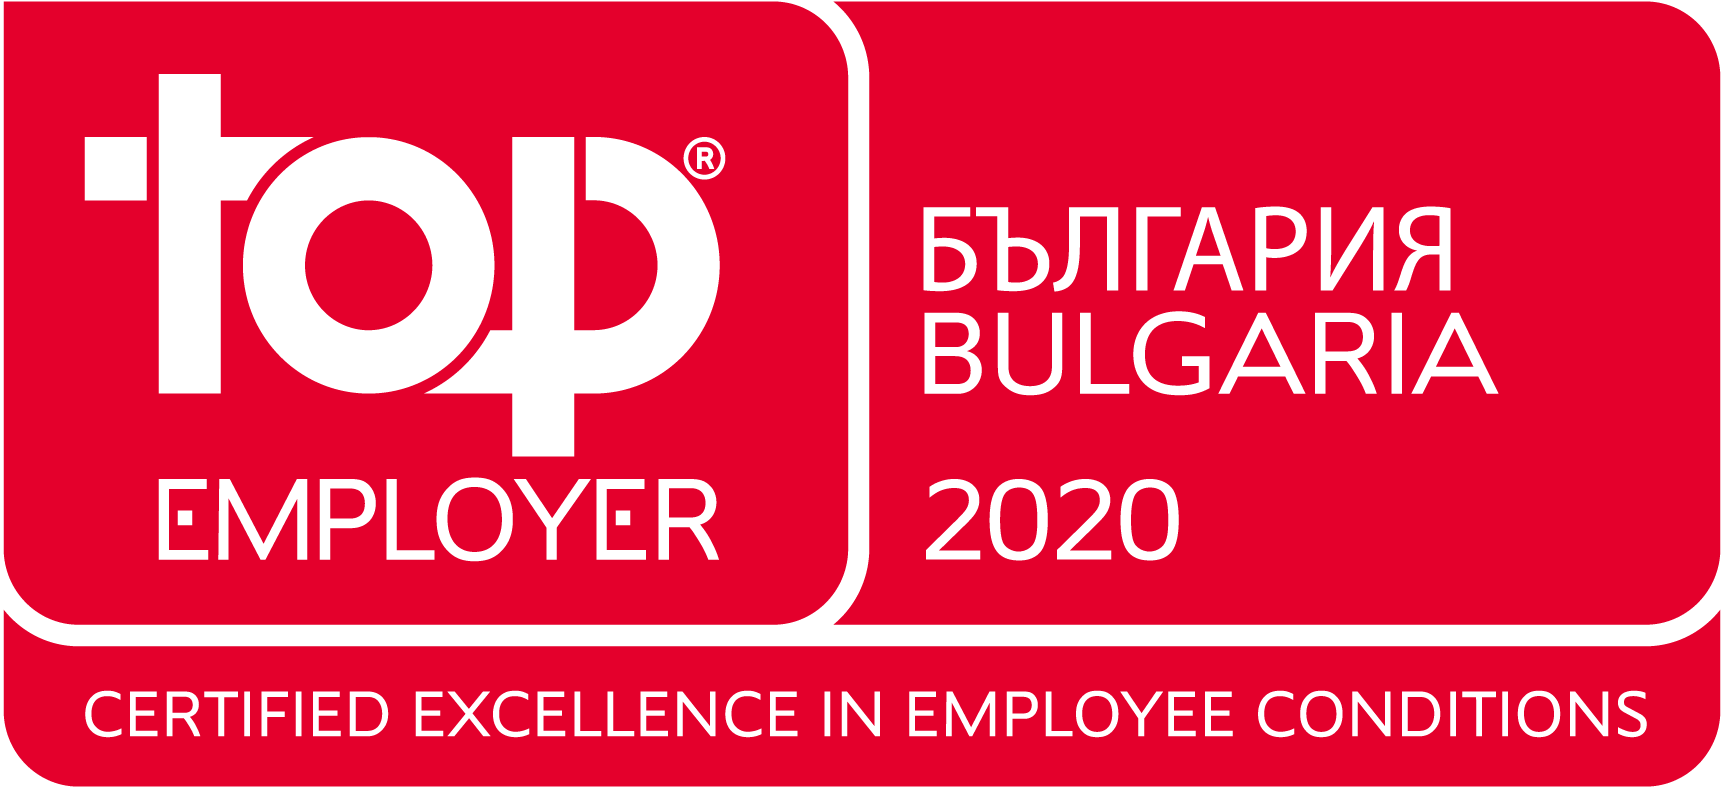 1 of 3 logos - Bulgaria